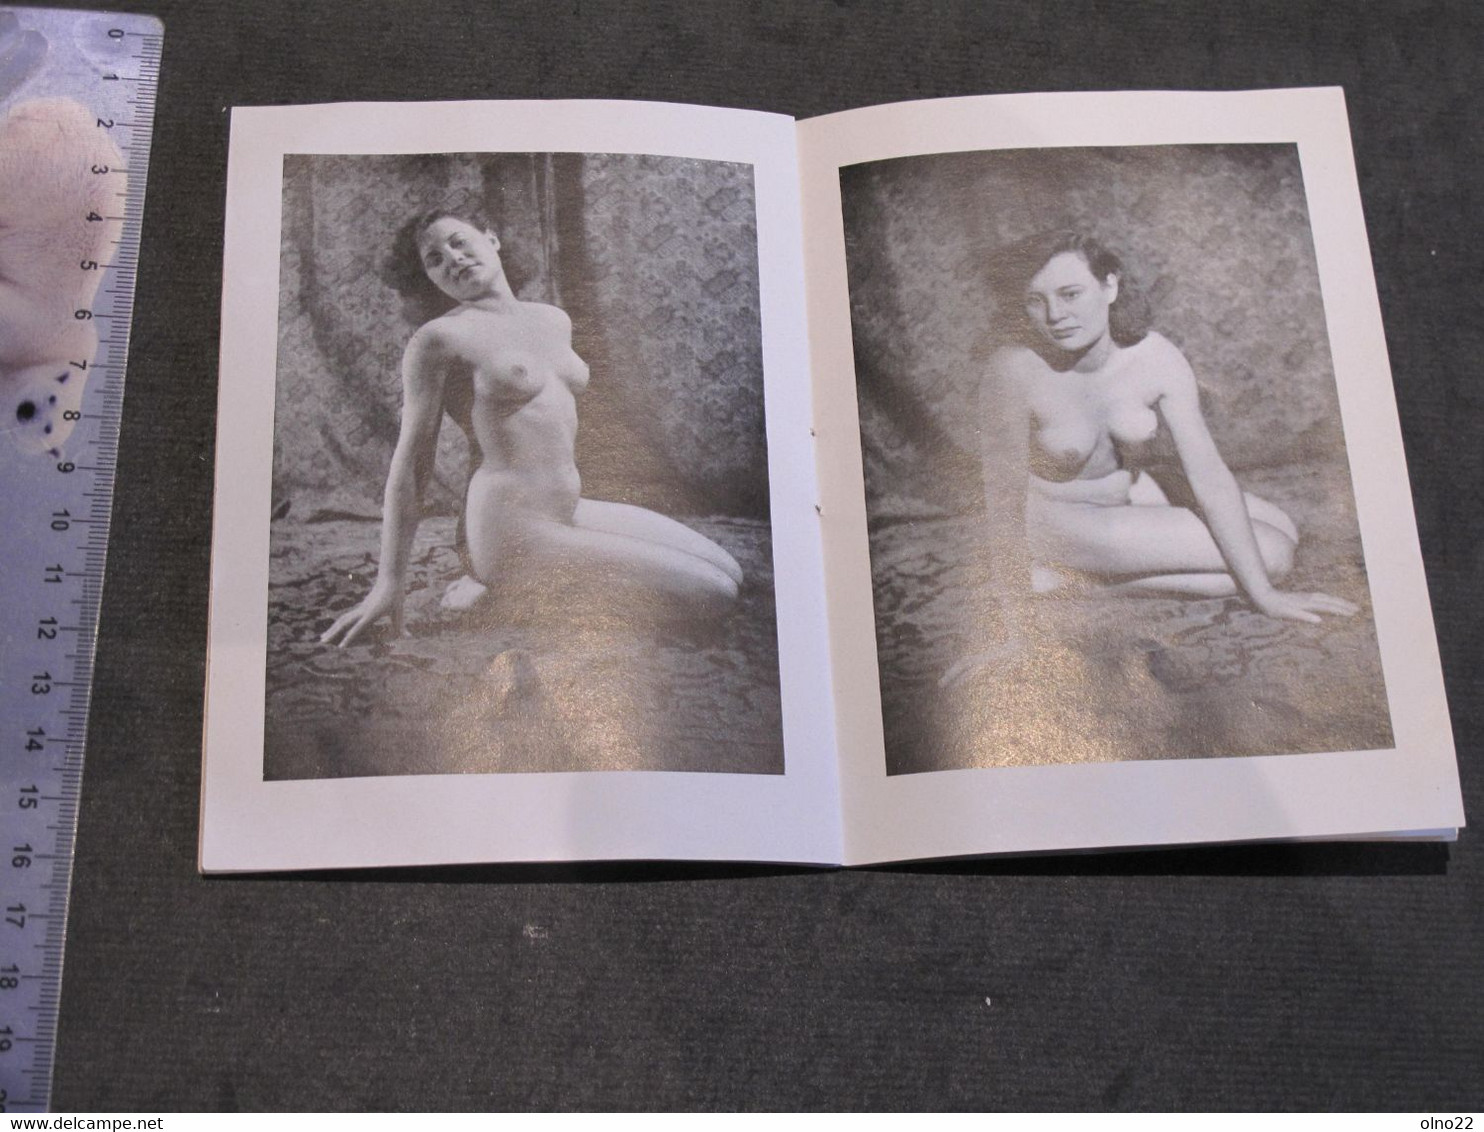 HARMONIE - CAMERA BIELD KIEL - PETIT RECUEIL DE 15 PHOTOS N/B DE NUS FEMININS EDITION ALLEMANDE - CIRCA ANNEES 50 - Photographie